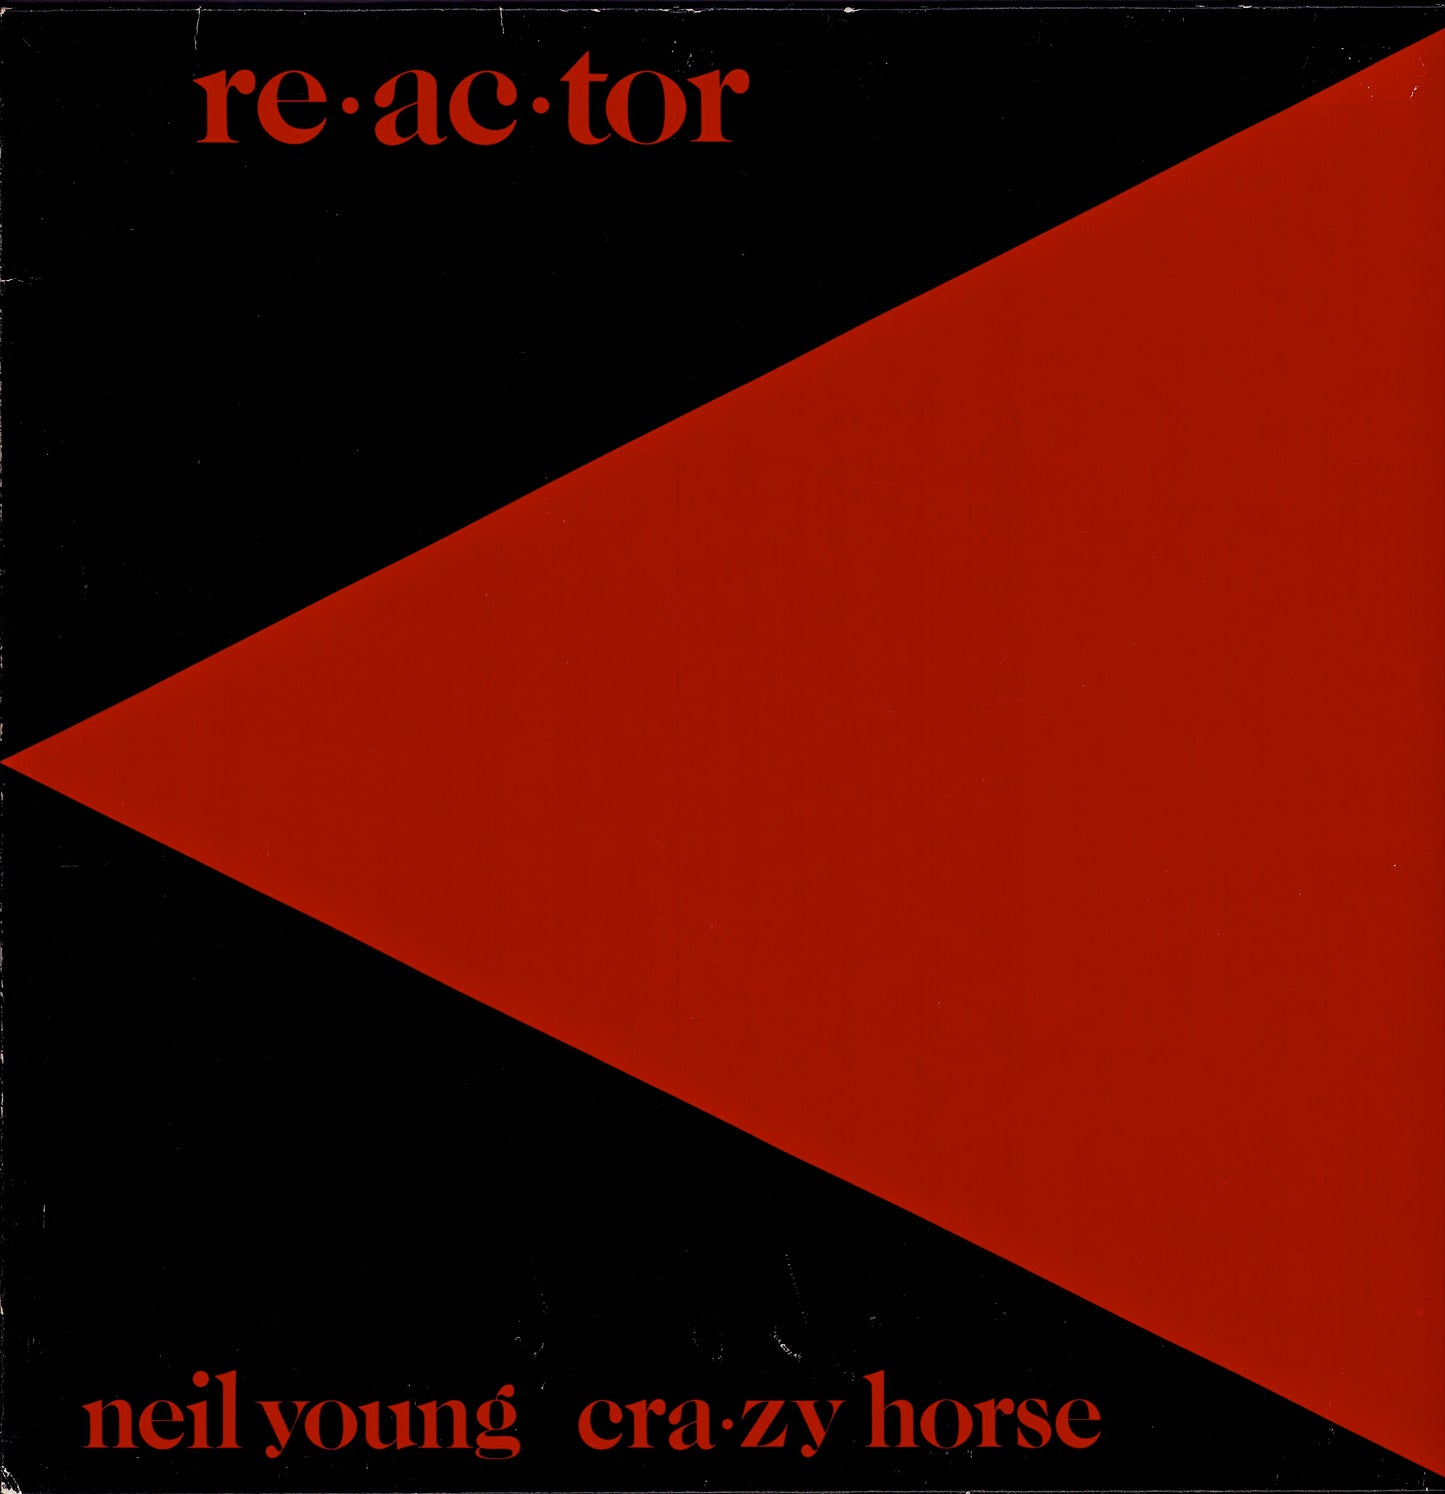 Neil Young & Crazy Horse ‎- Reactor (Vinyl LP)